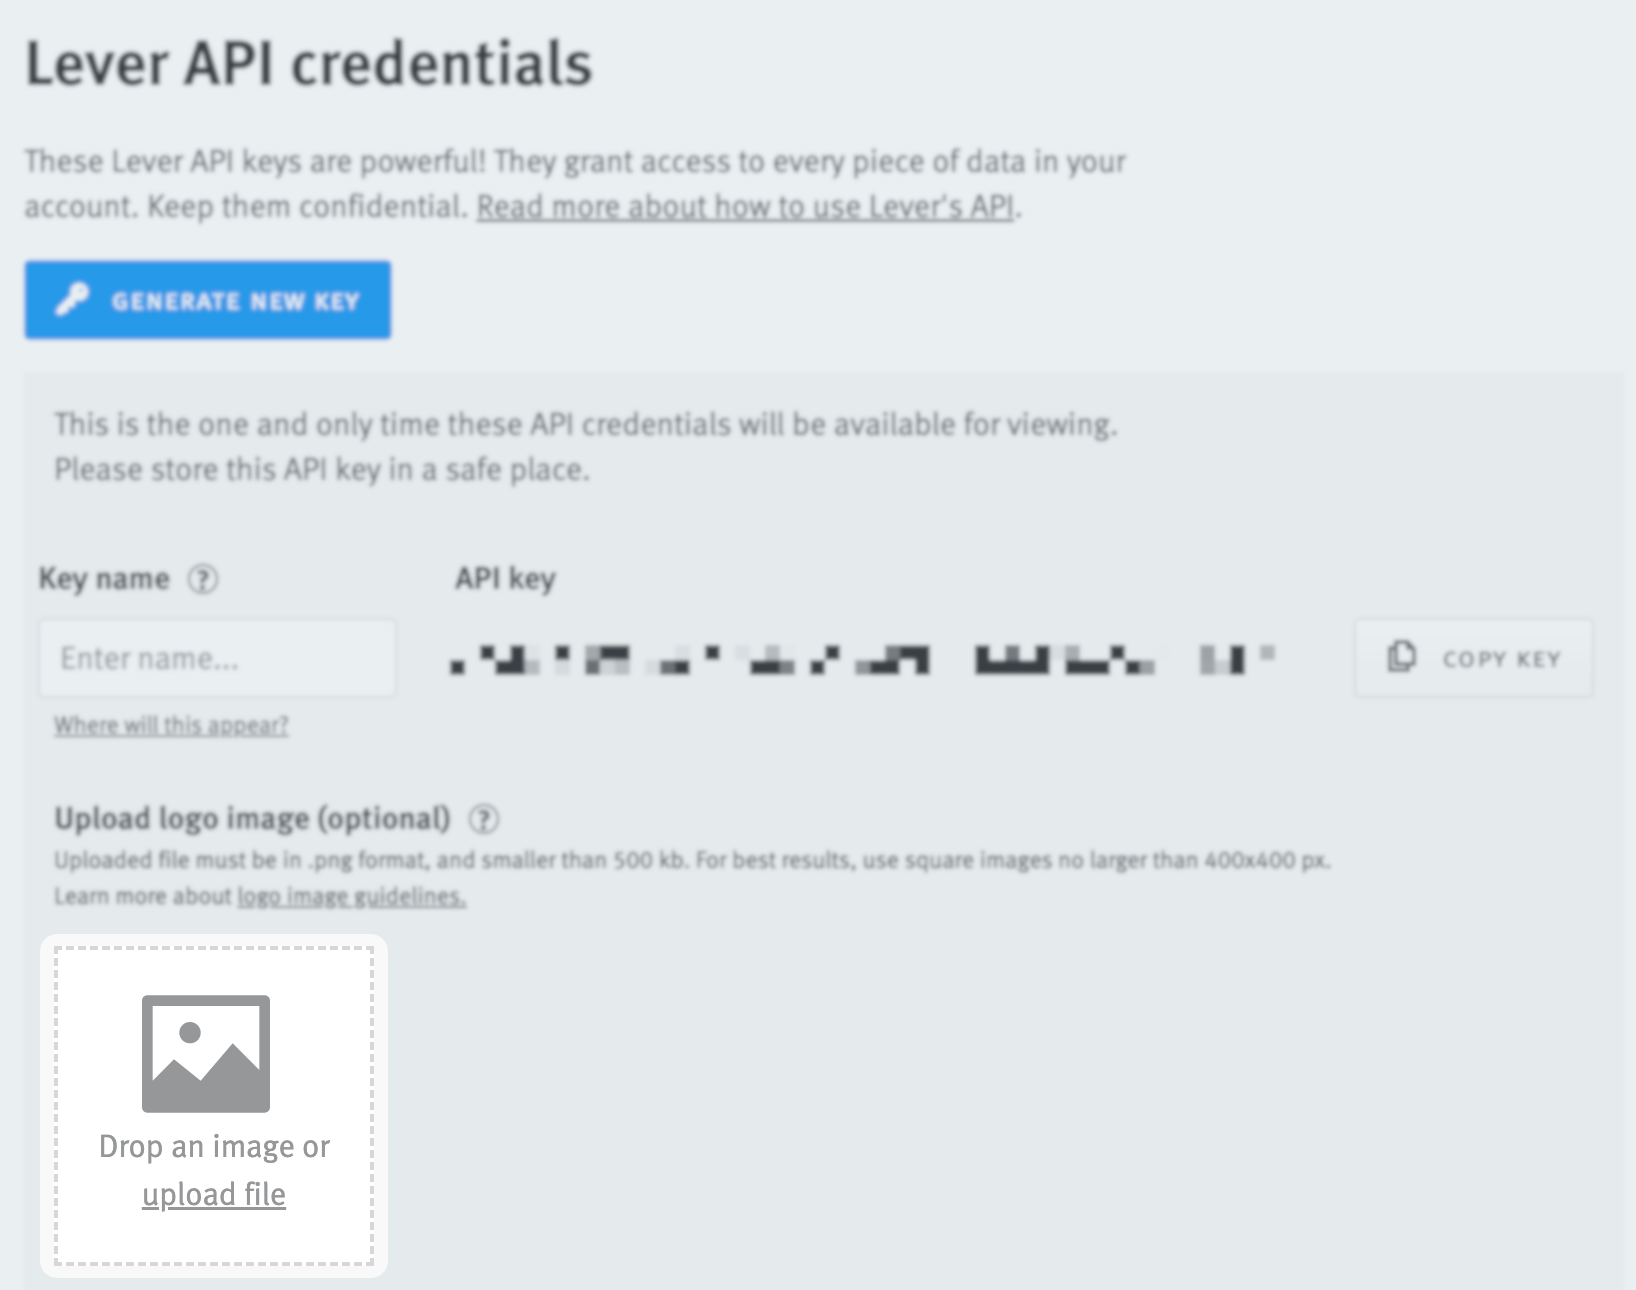 API key generation configuration; image upload field is highlighted